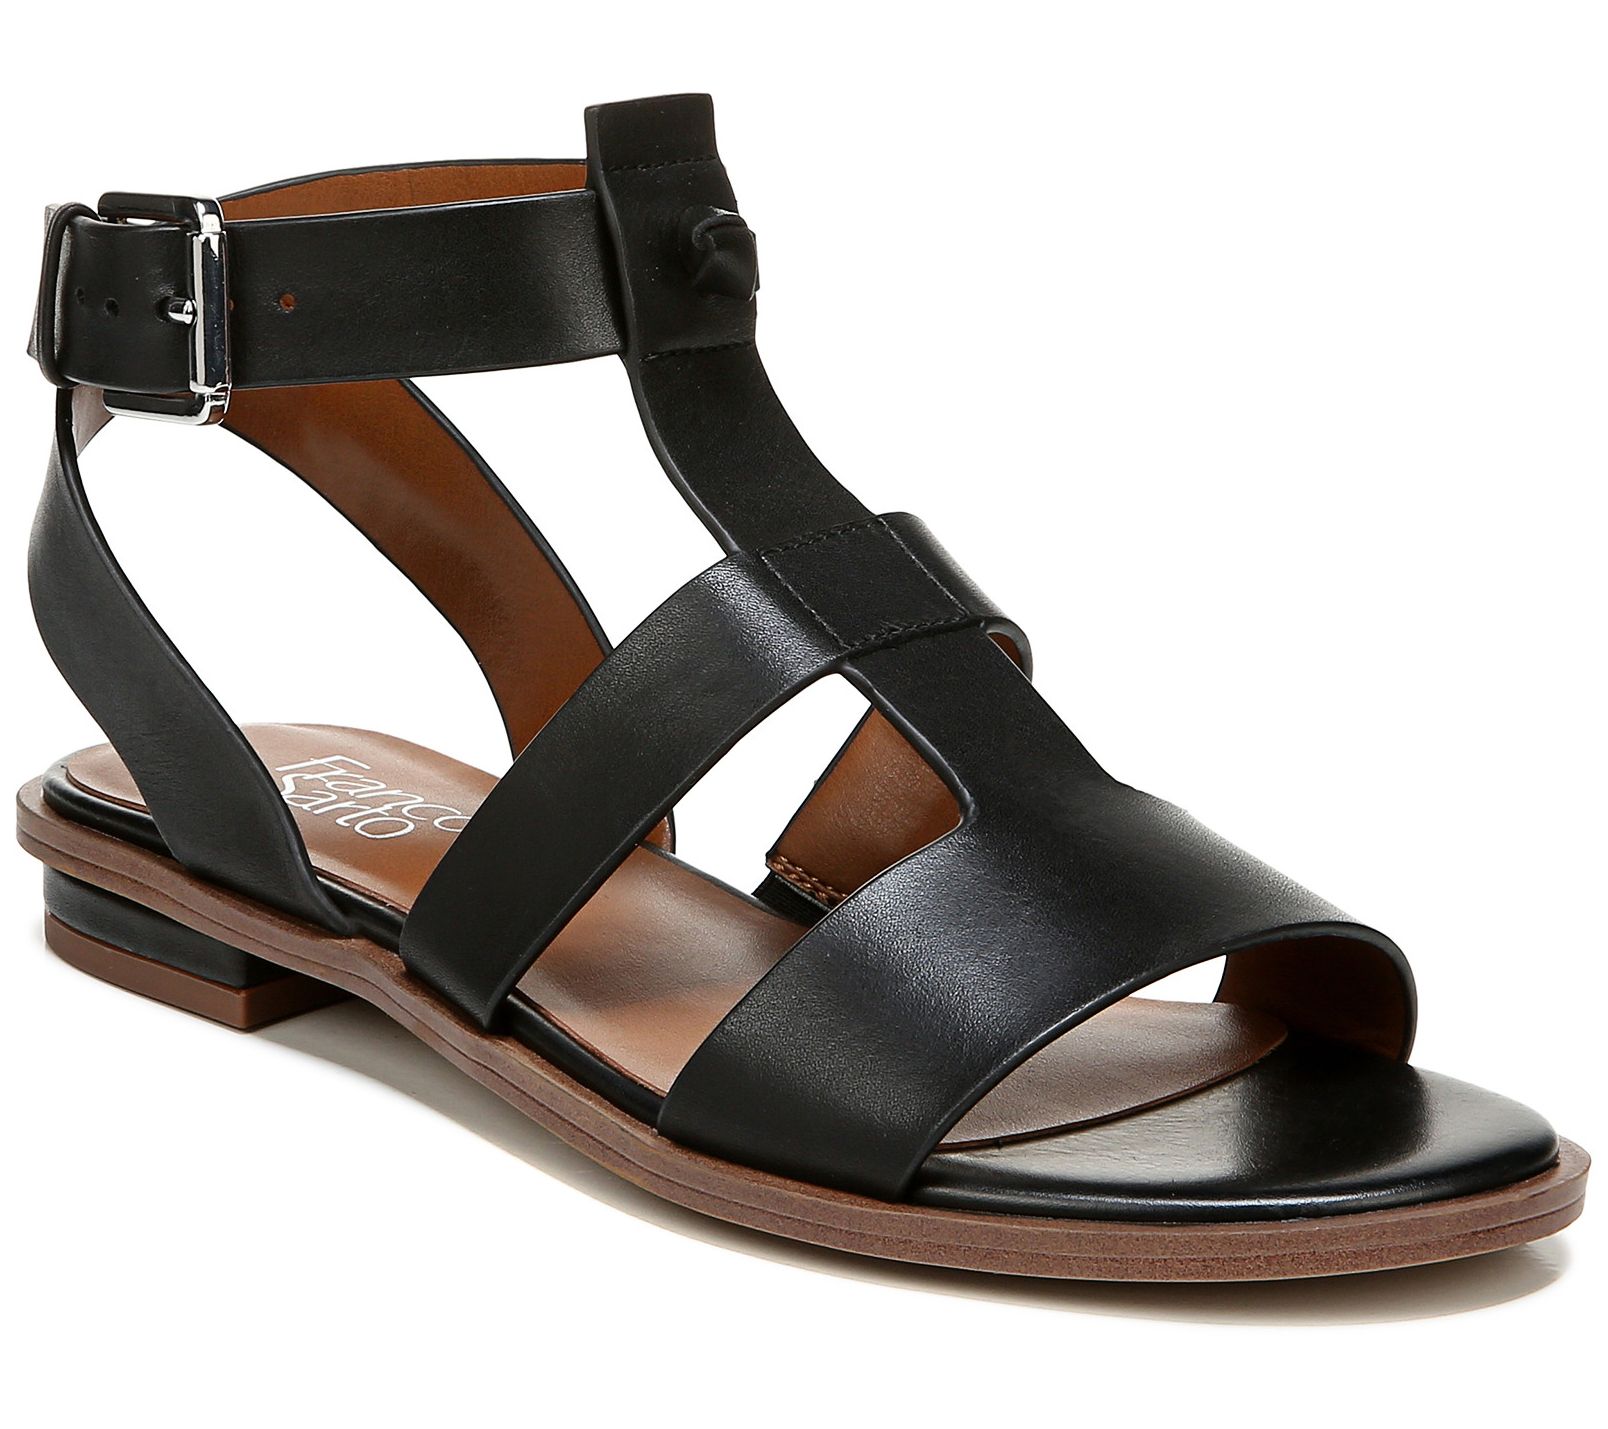 Franco Sarto Ankle-Strap Leather Sandals - Moni - QVC.com